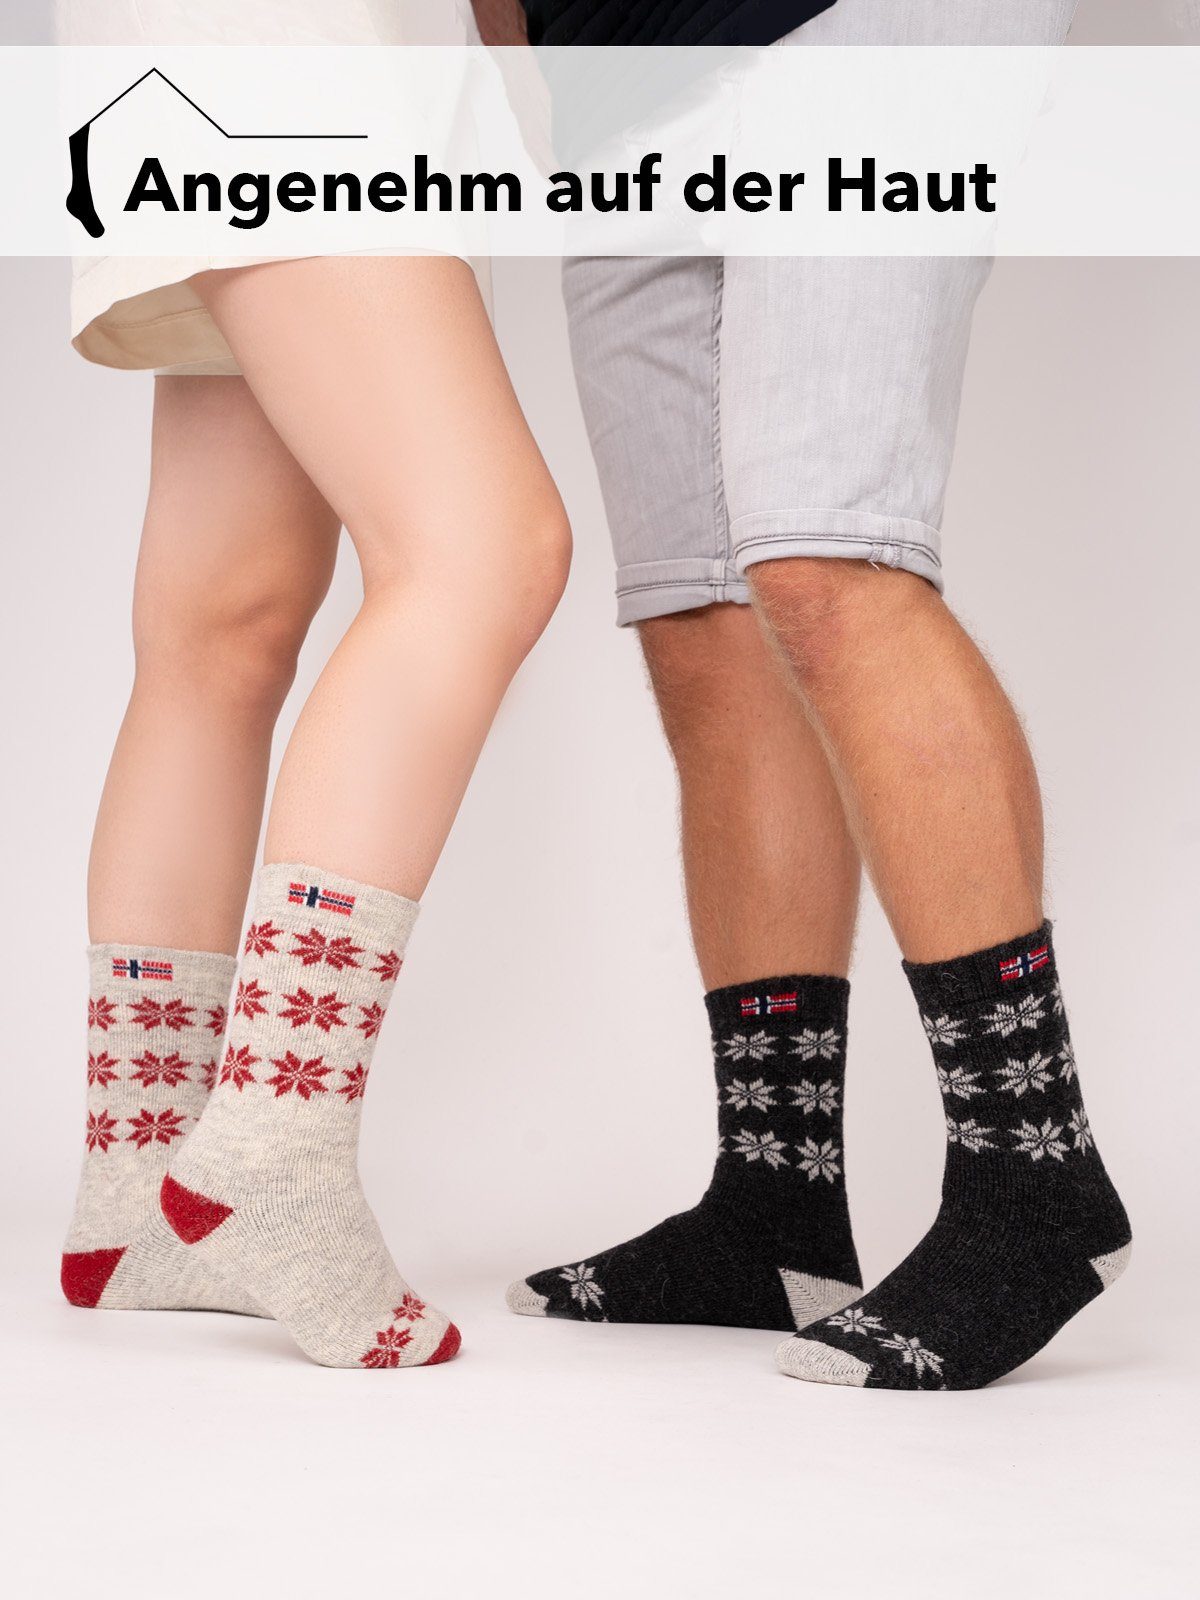 Kuschelsocken Skandinavische Dicke "Snowflake Norwegischem Nordic Hyggelig Warm Hoher Natur Design Wollanteil Socken Socken HomeOfSocks 80% Wollsocke Norwegen"